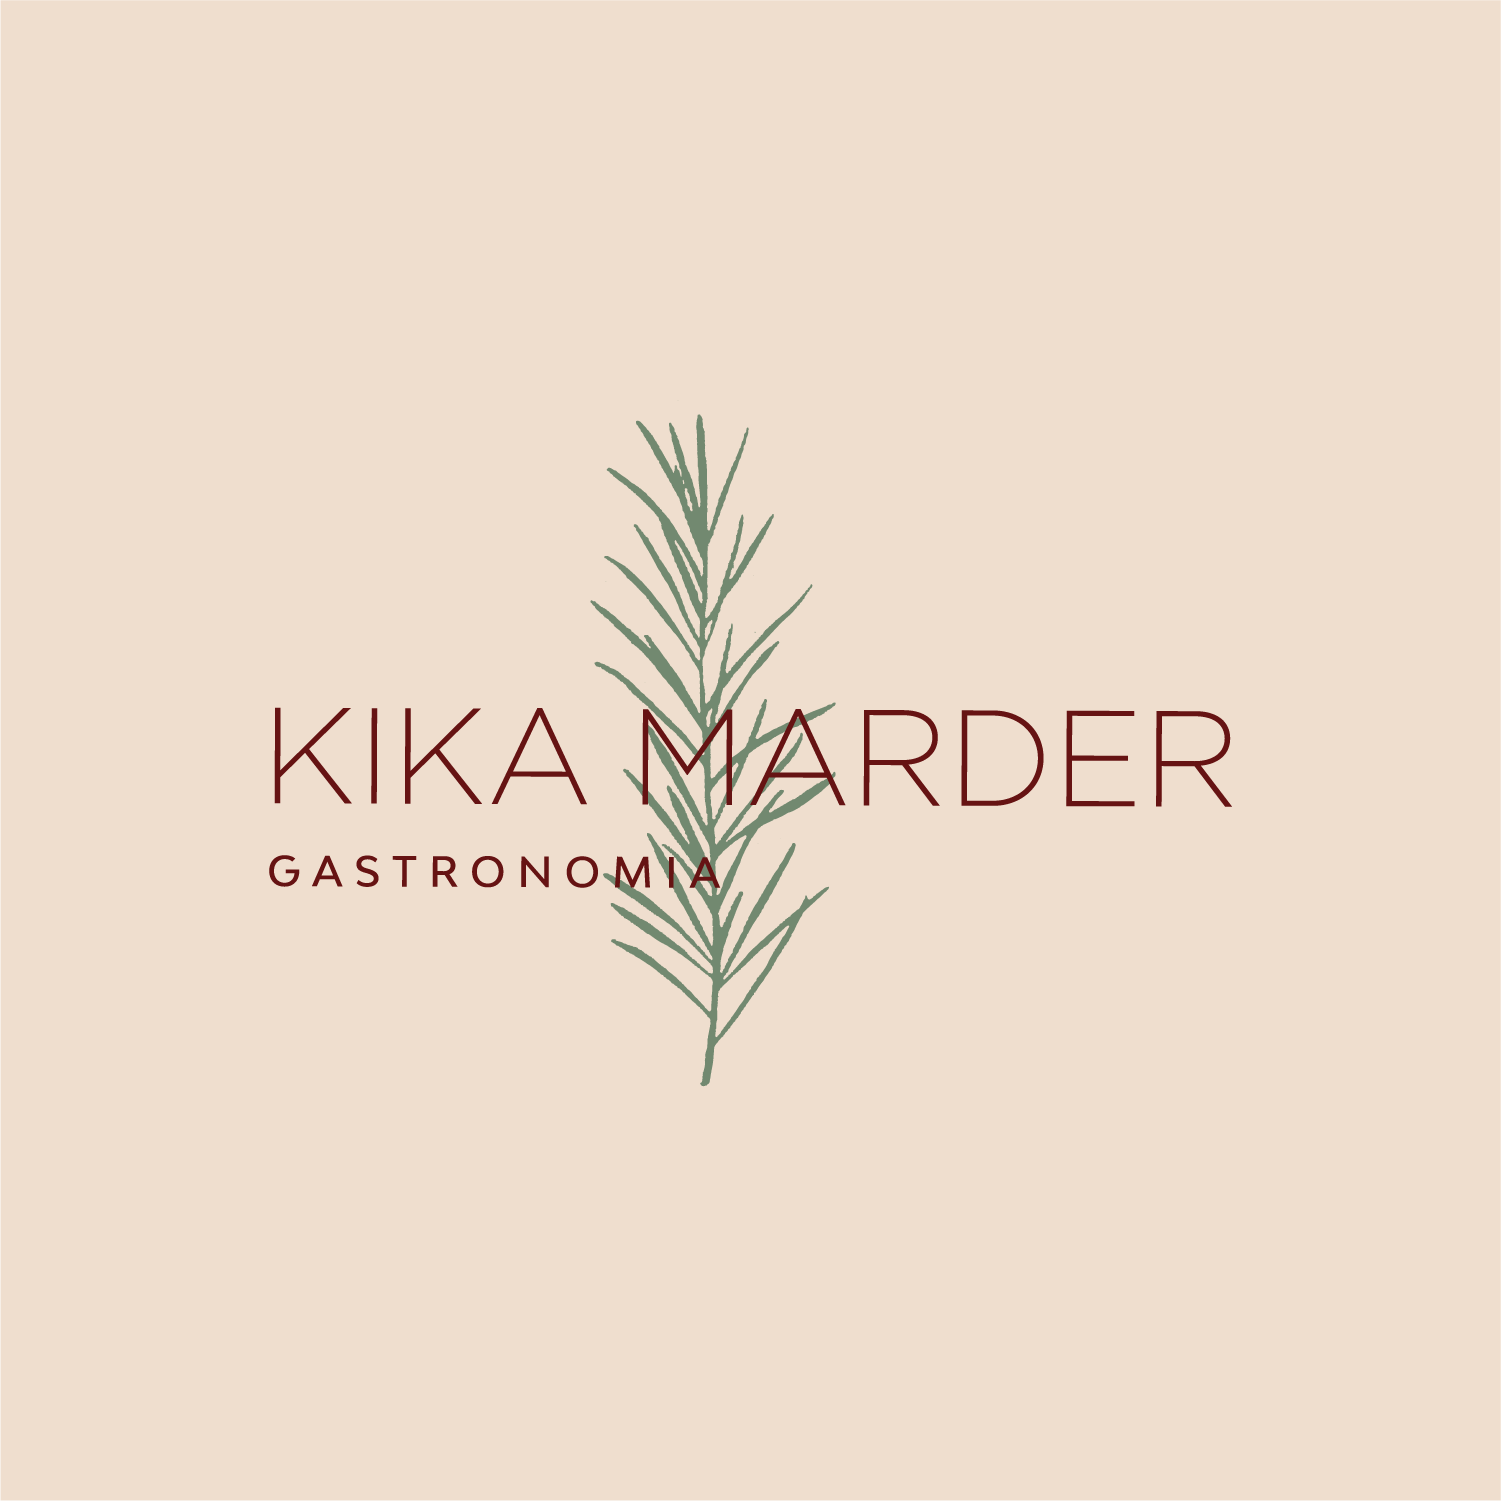 Kika Marder gastronomia